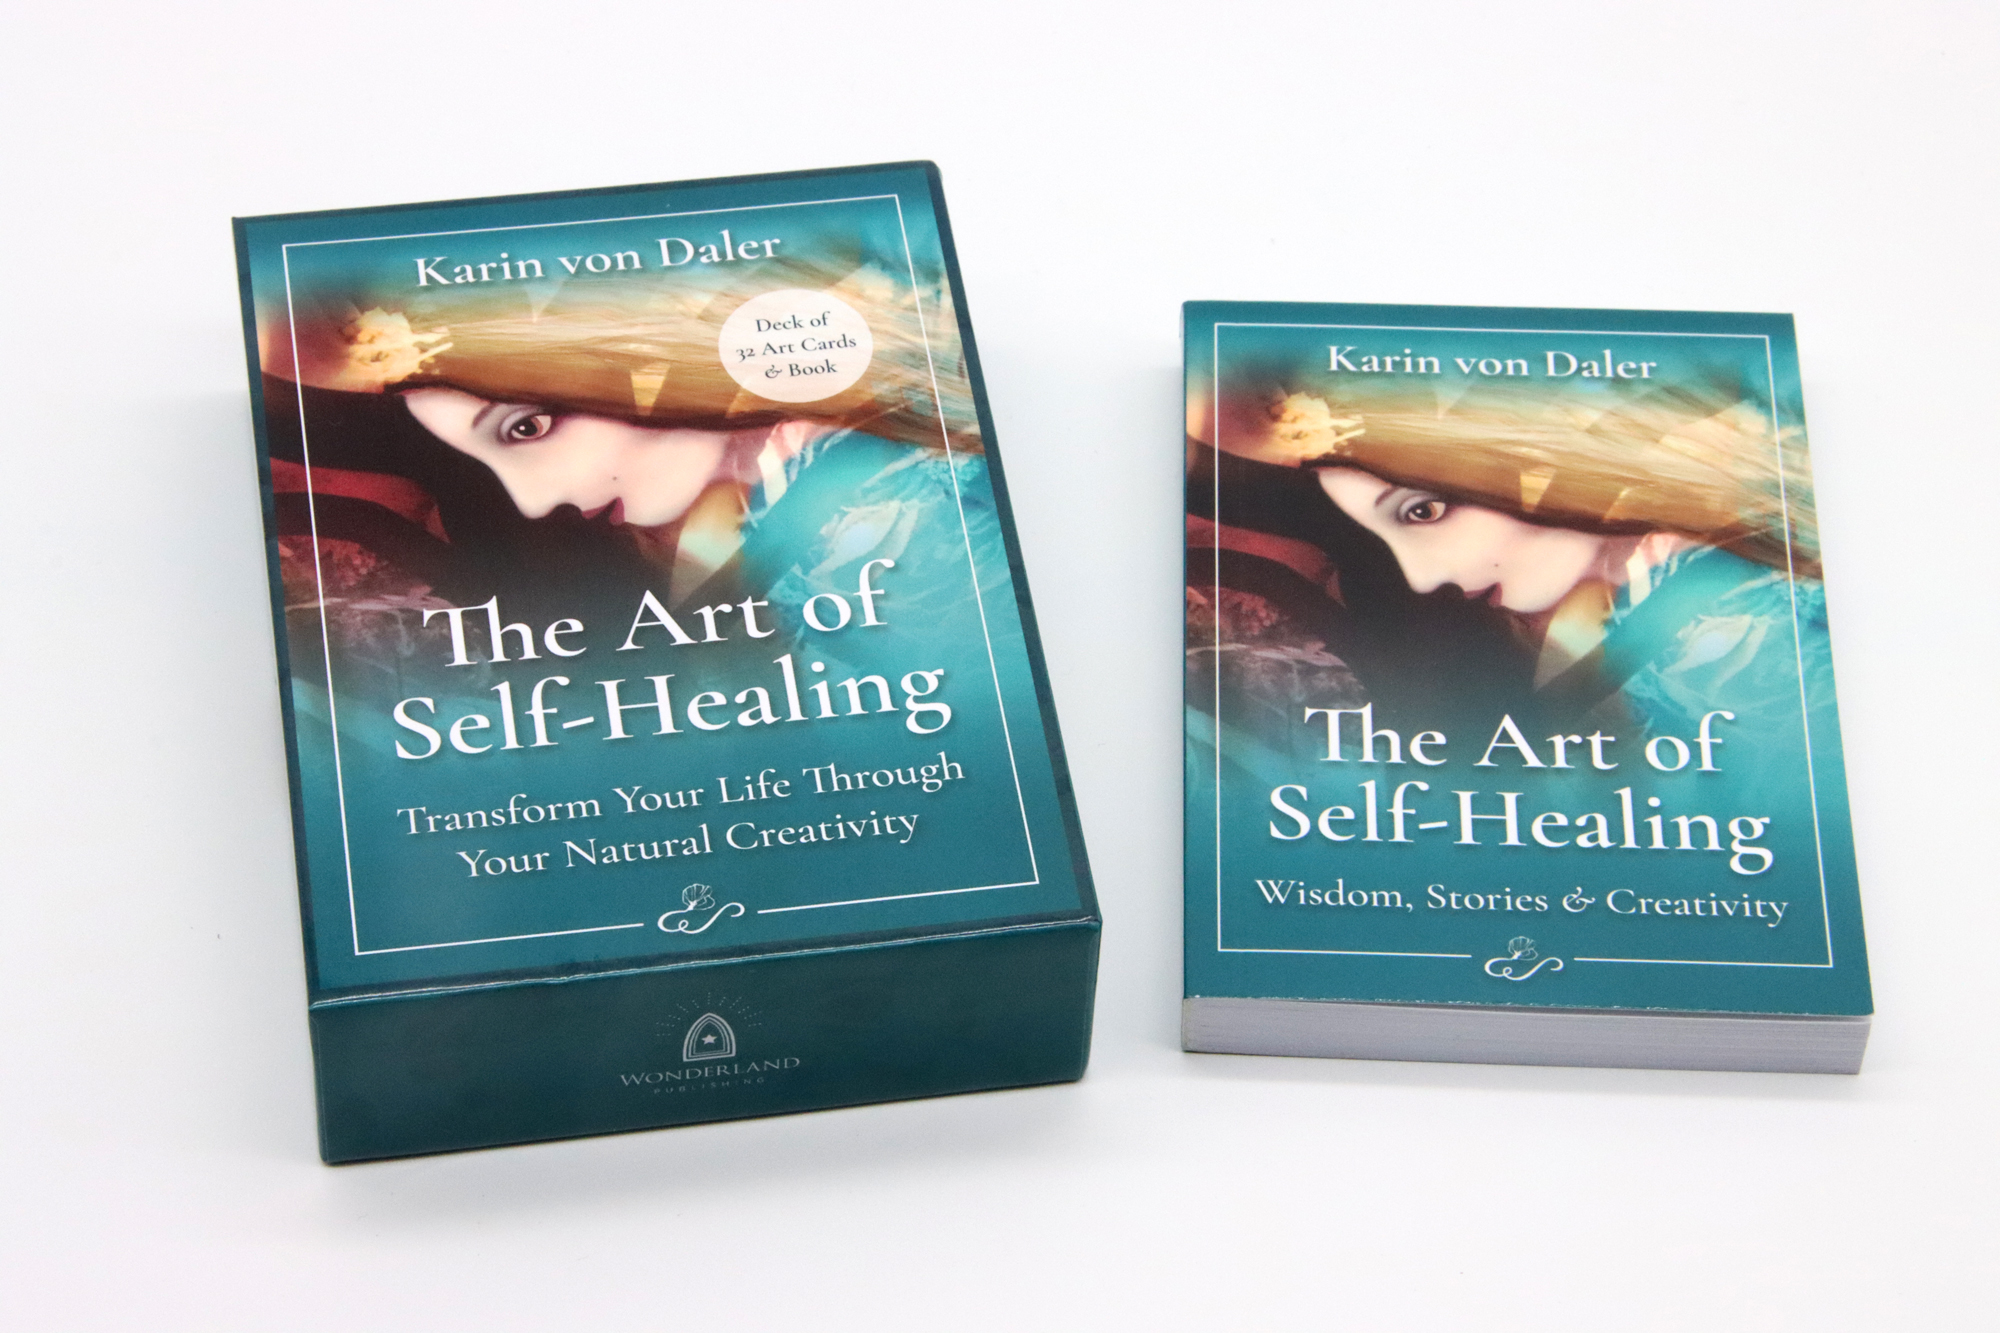 The Art of Self-Healing